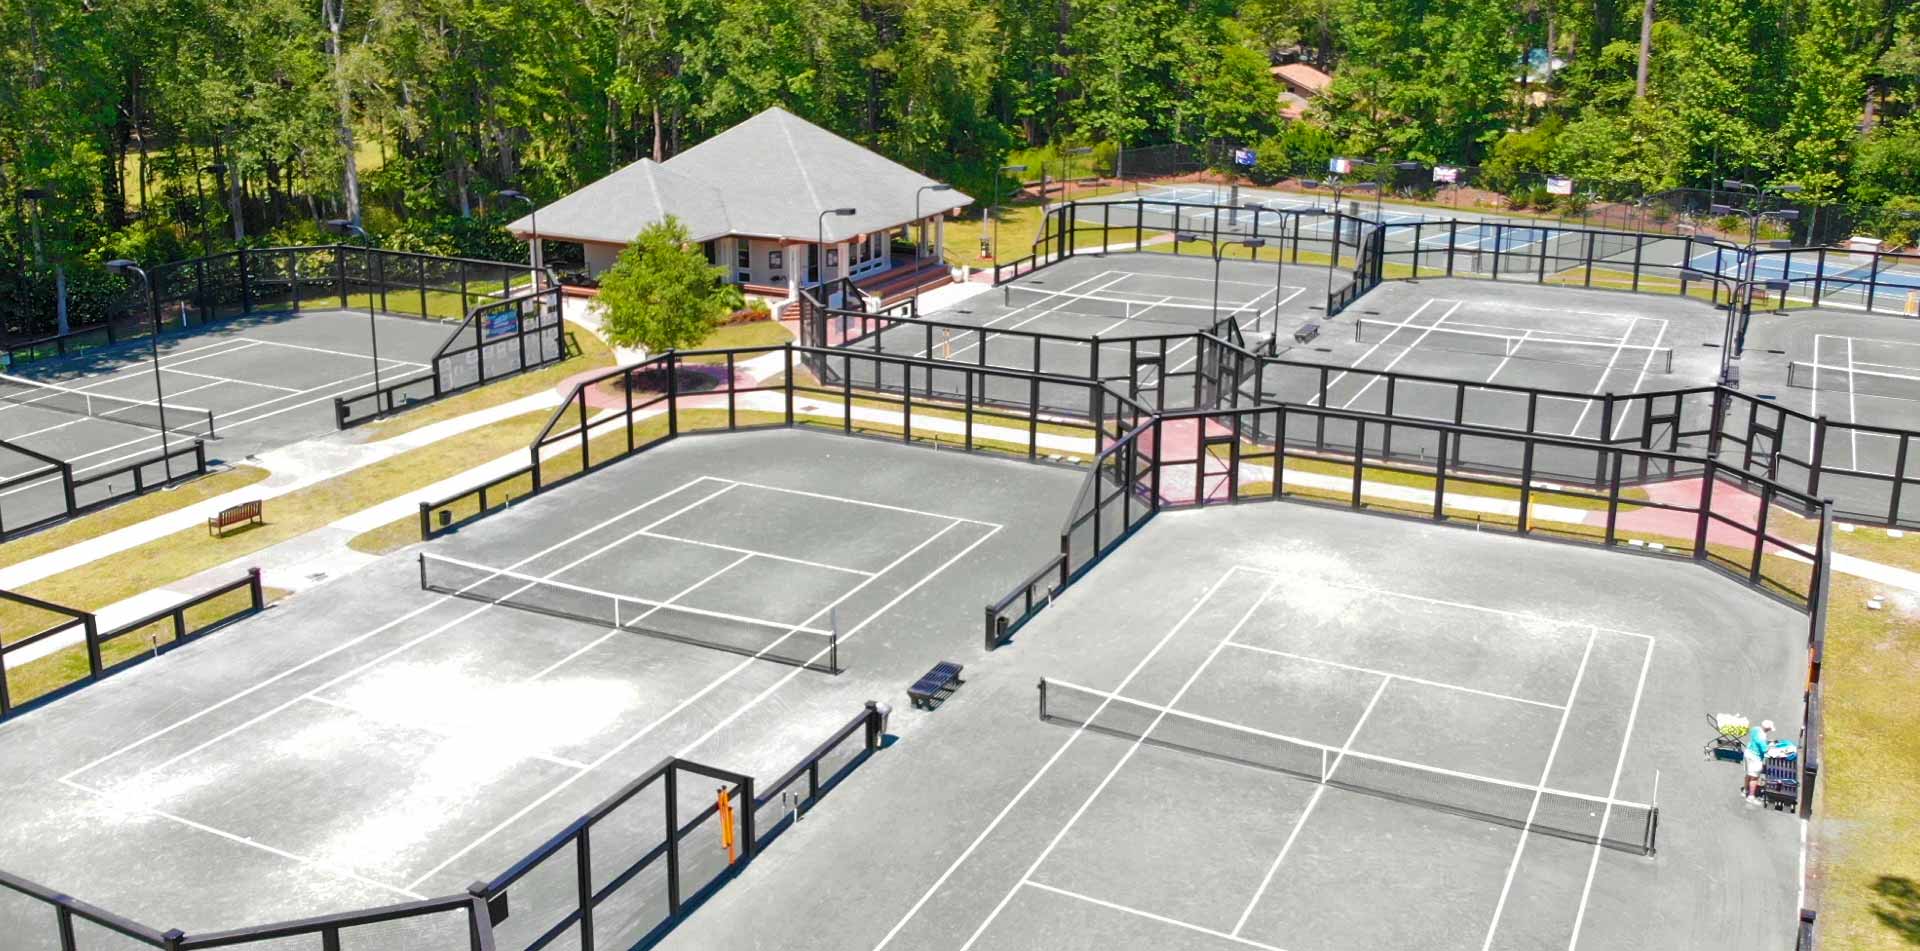 VIew of TLC Tennis facility